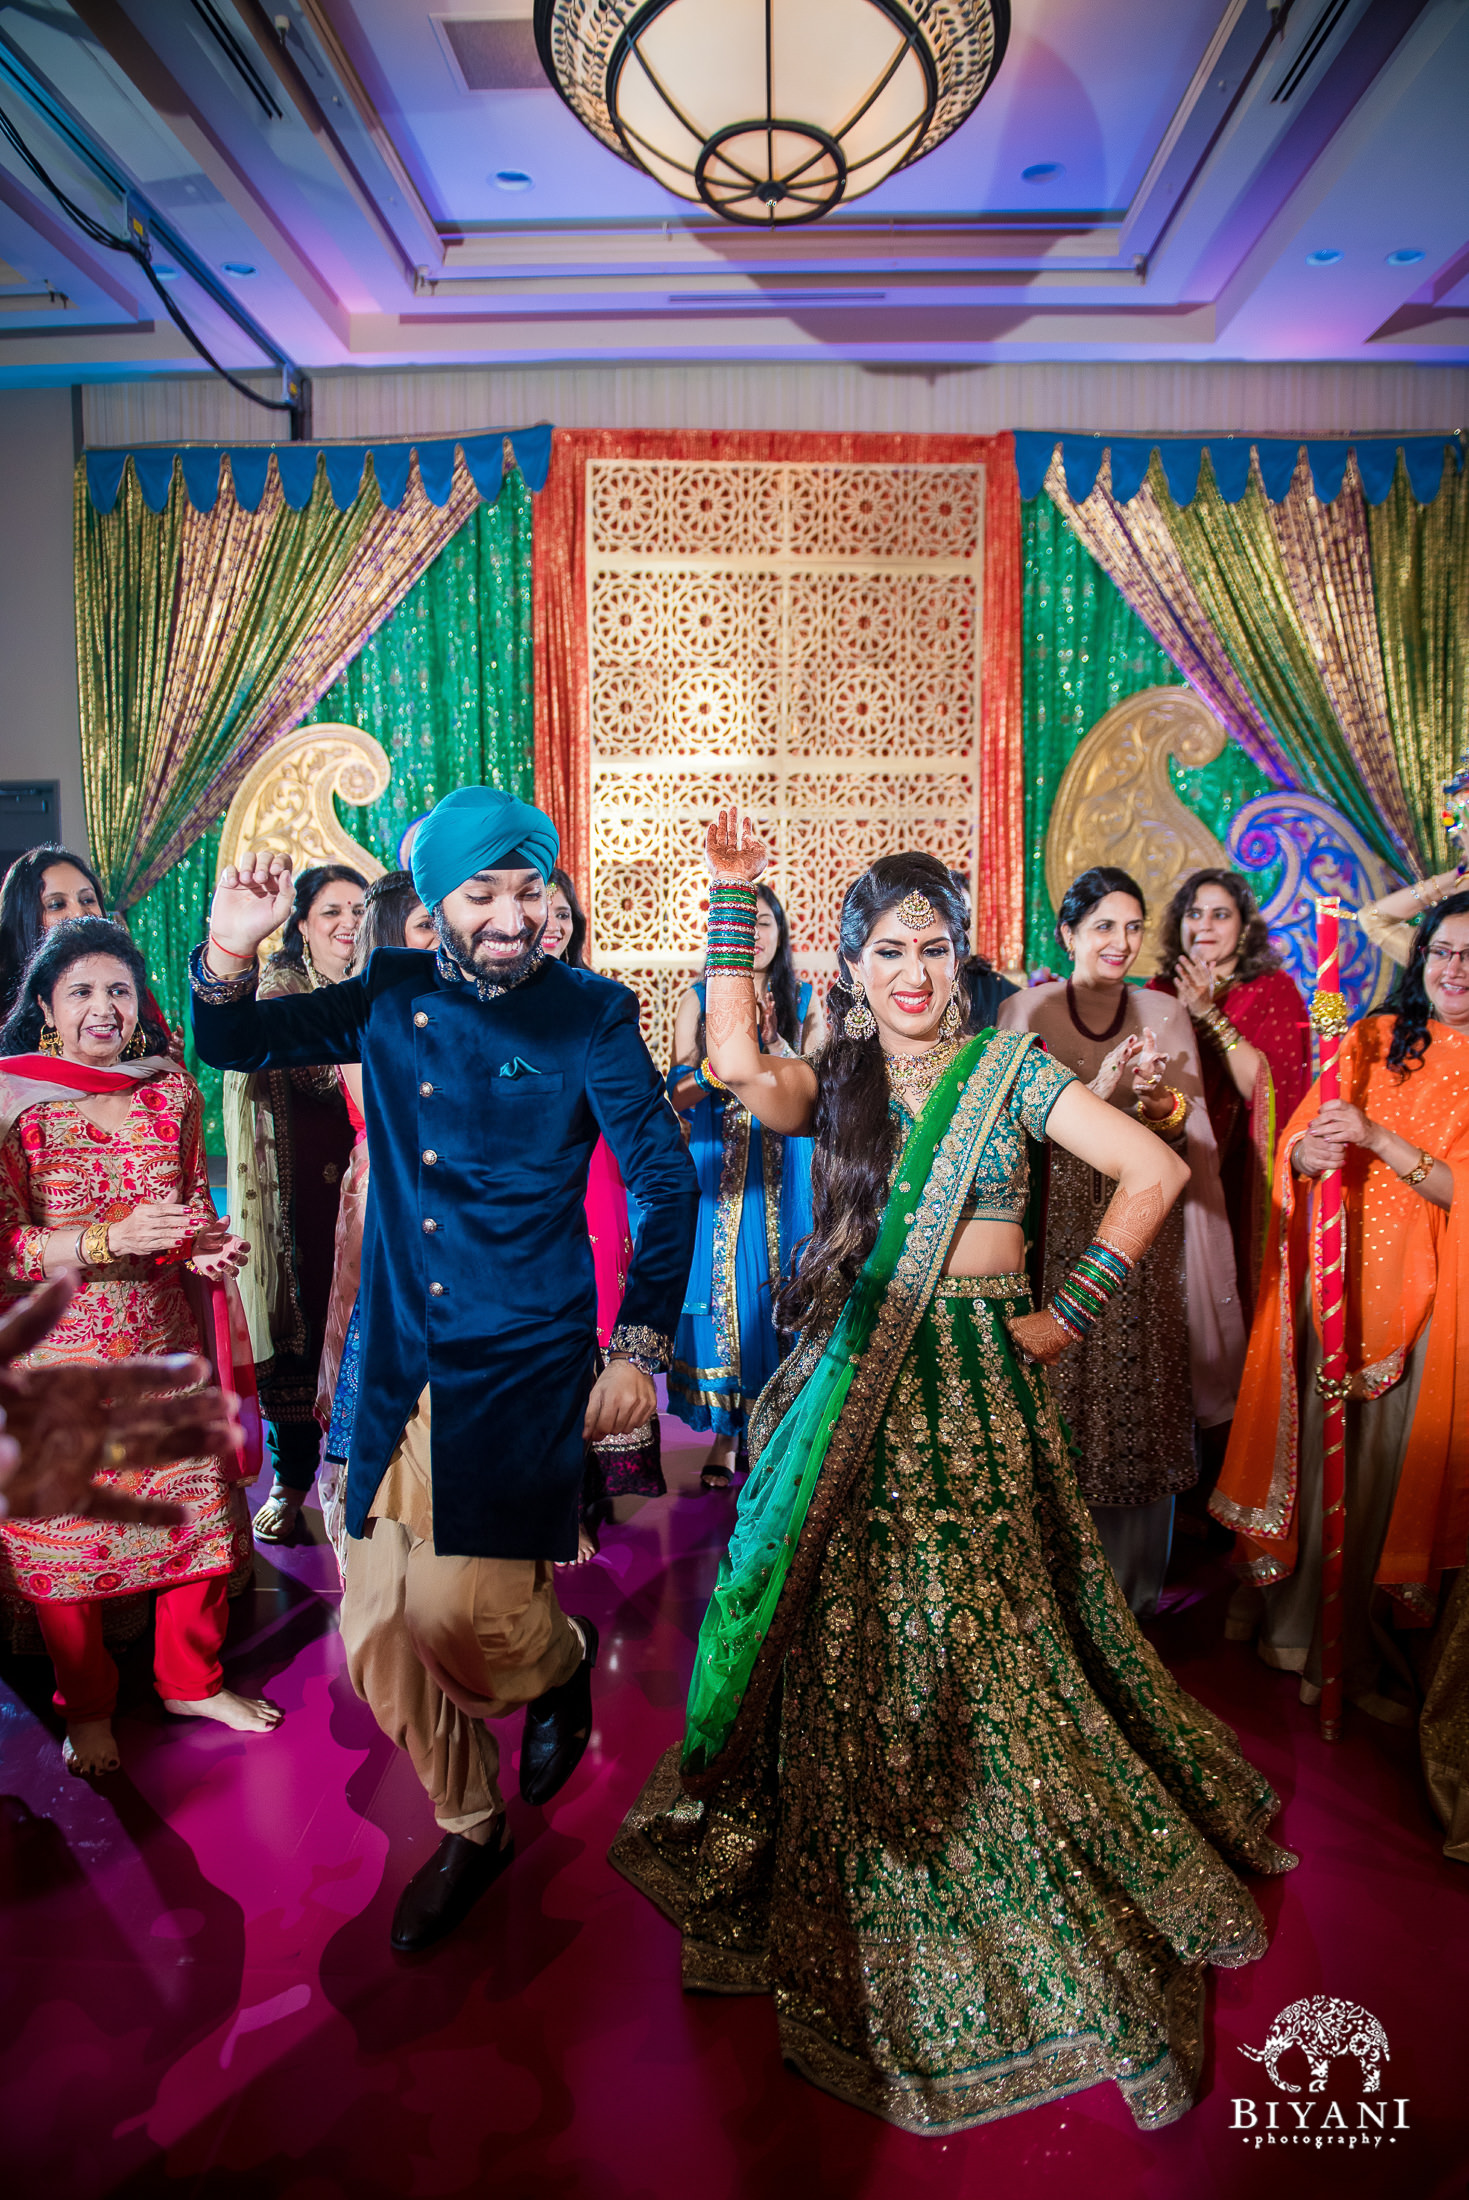 Punjabi bride and groom